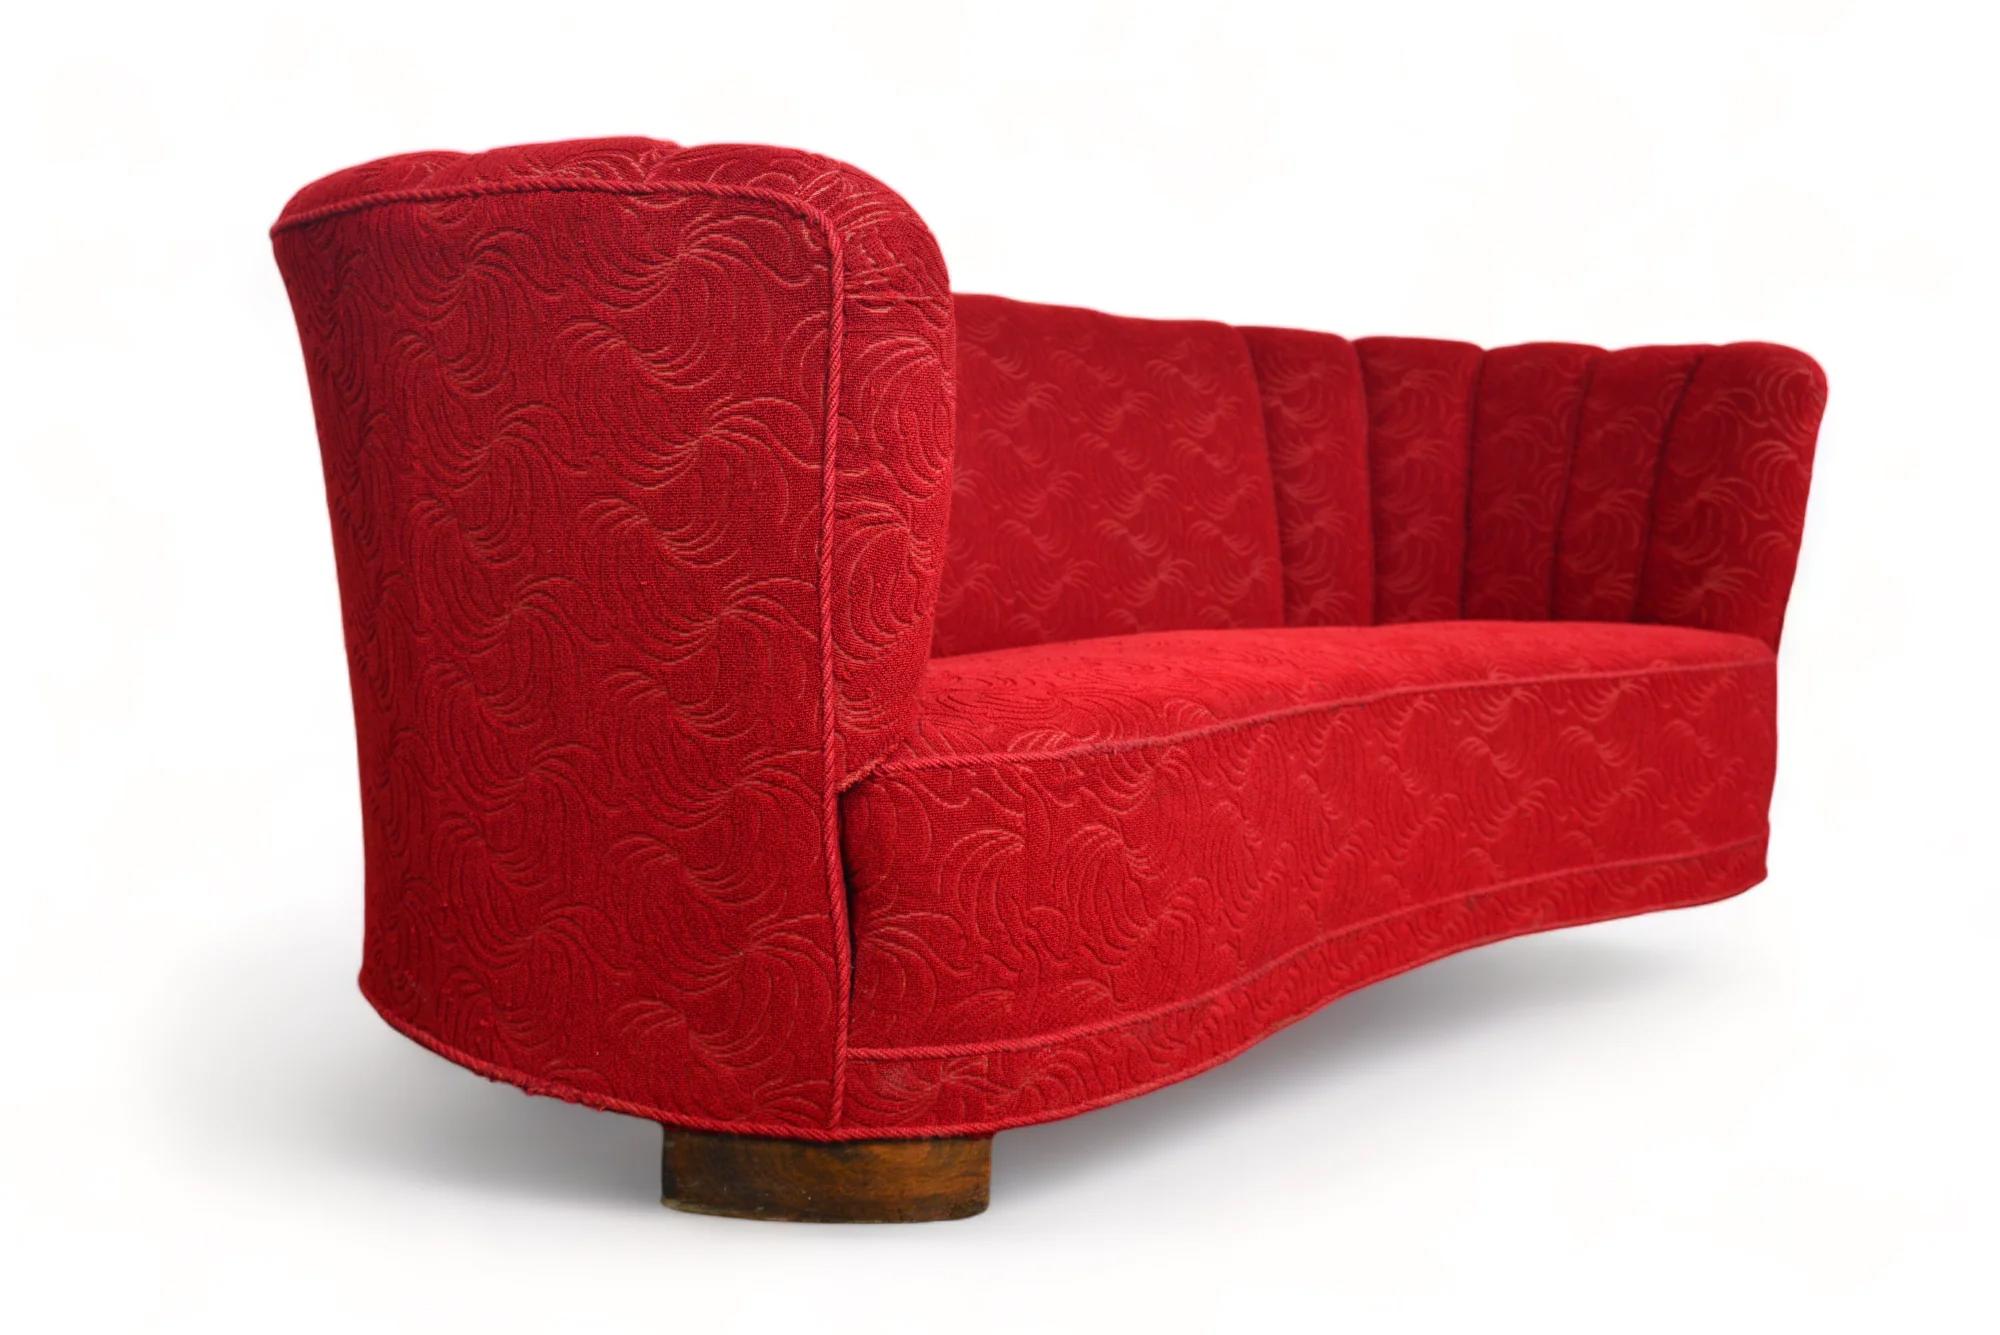 20th Century 1940s Banana Sofa In Crimson Brocade Fabric For Sale